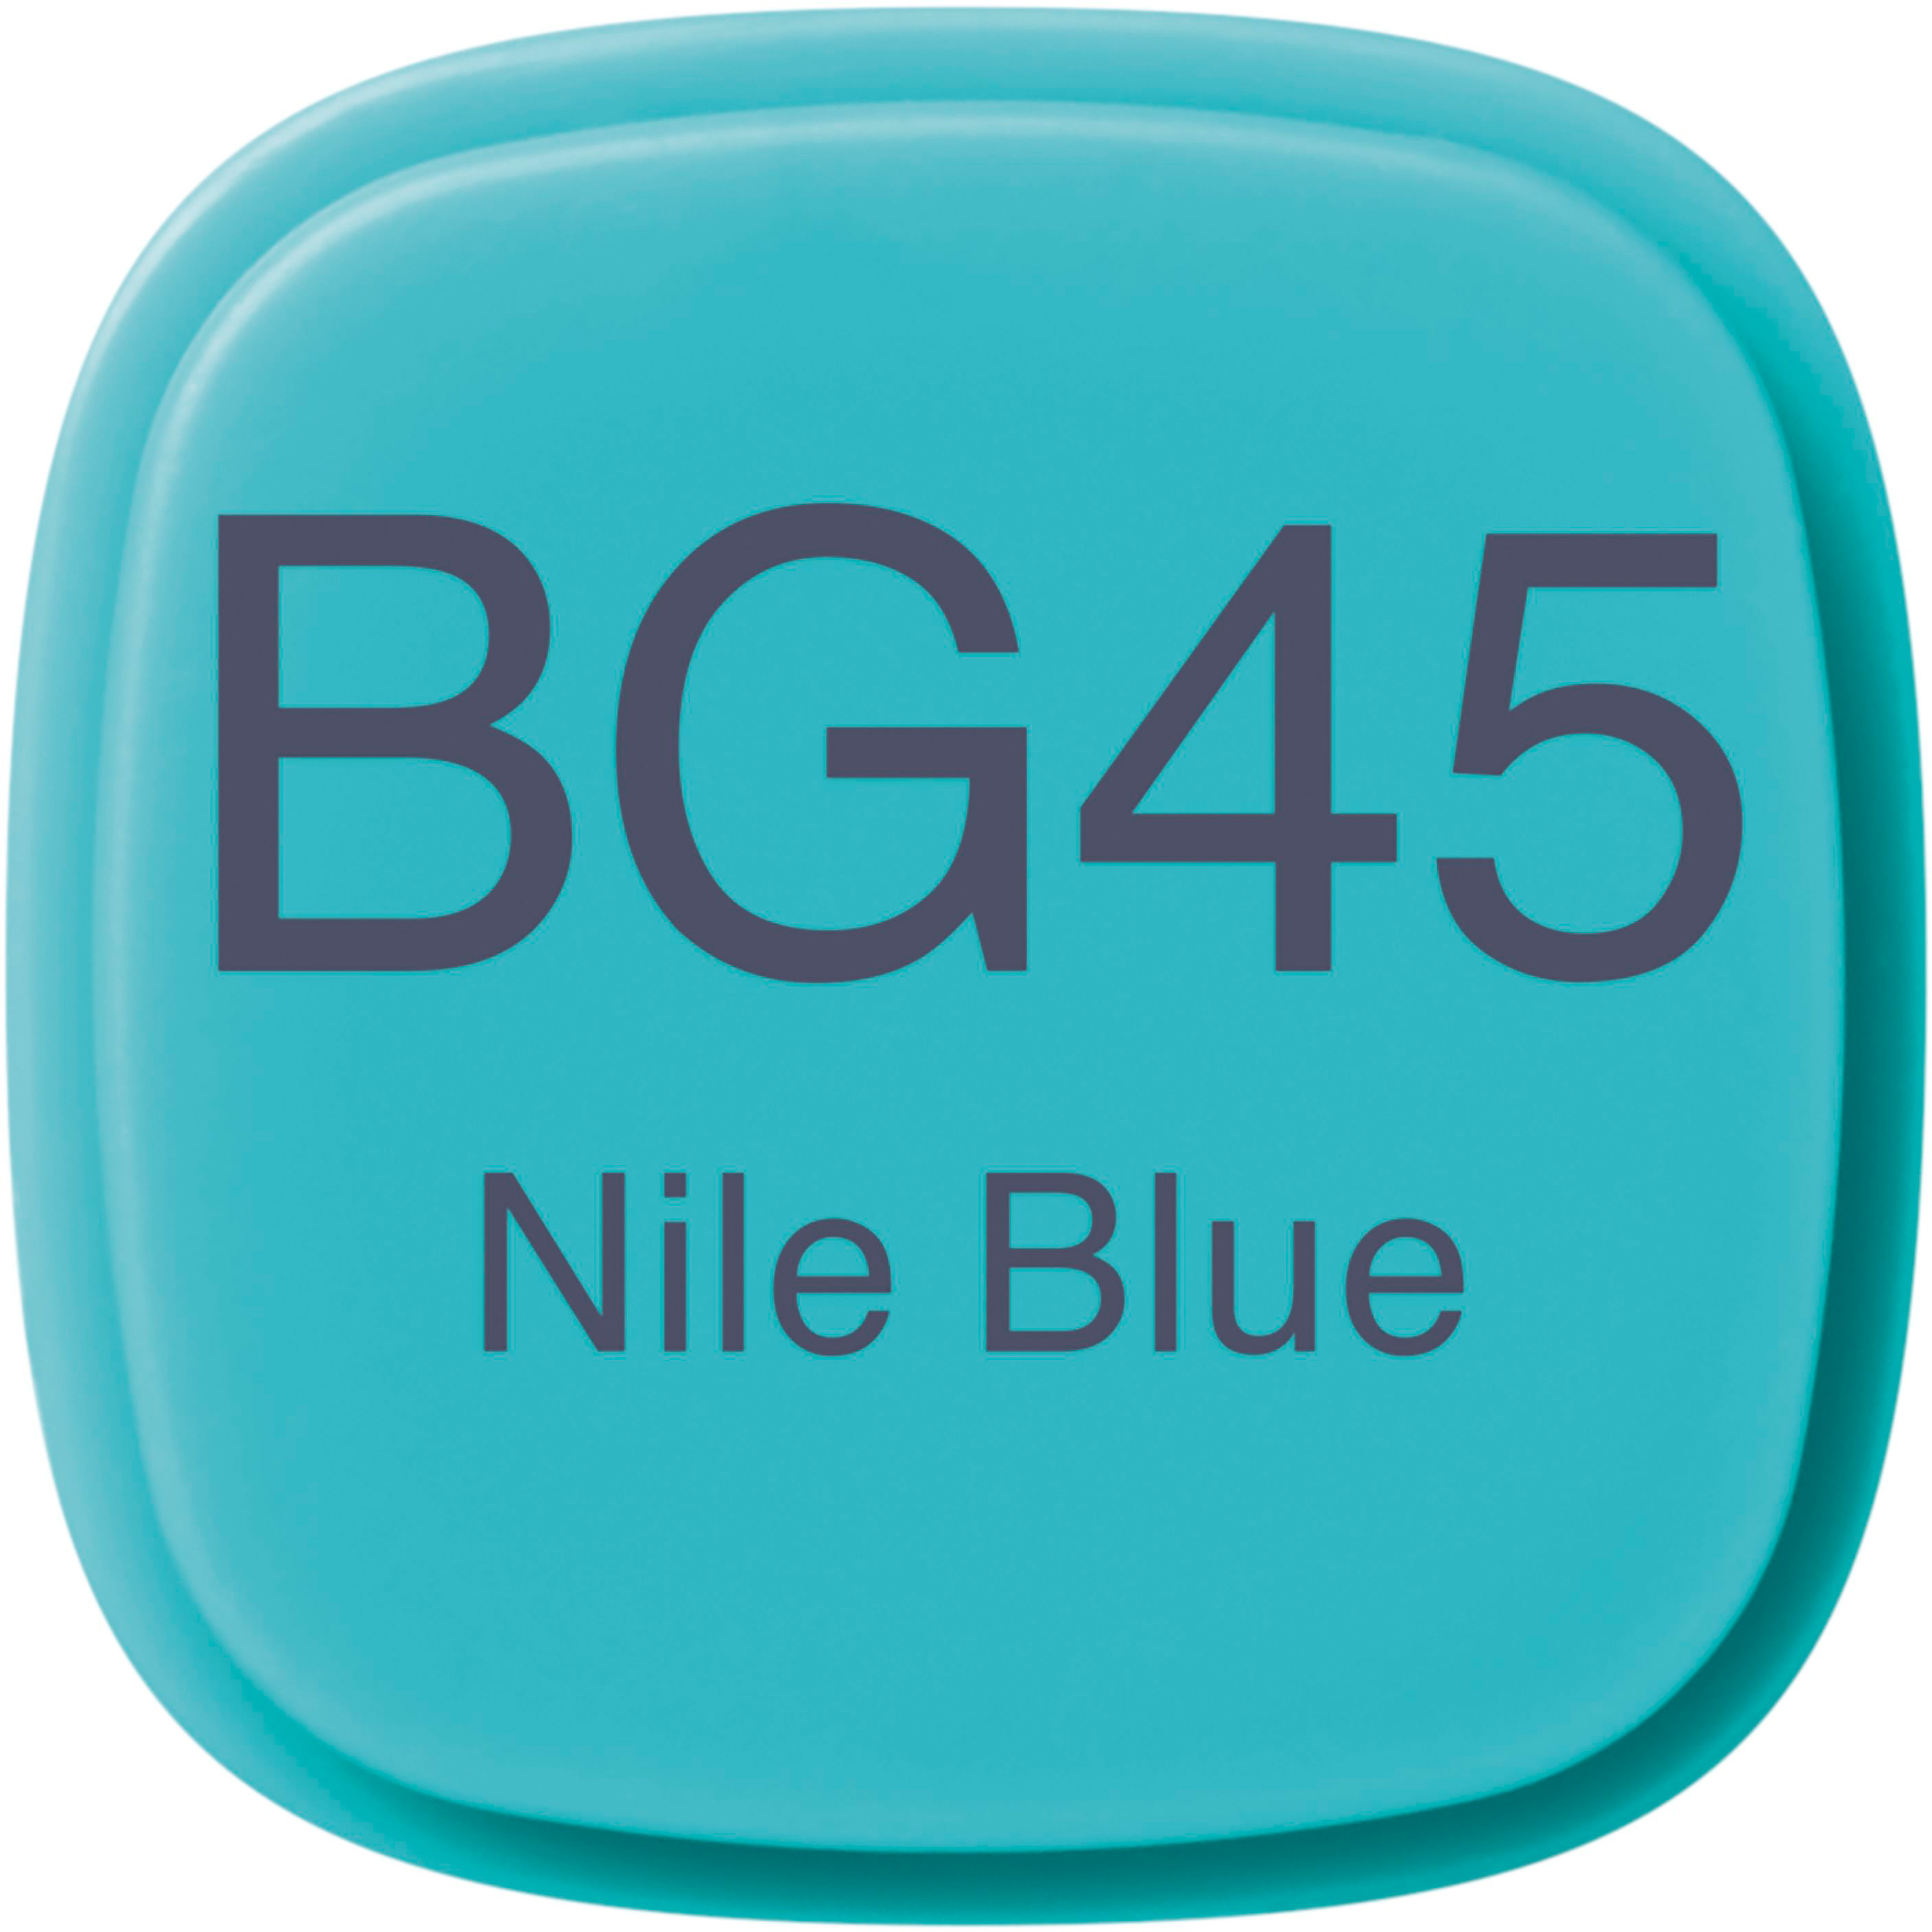 COPIC Marker Classic 20075220 BG45 - Nile Blue